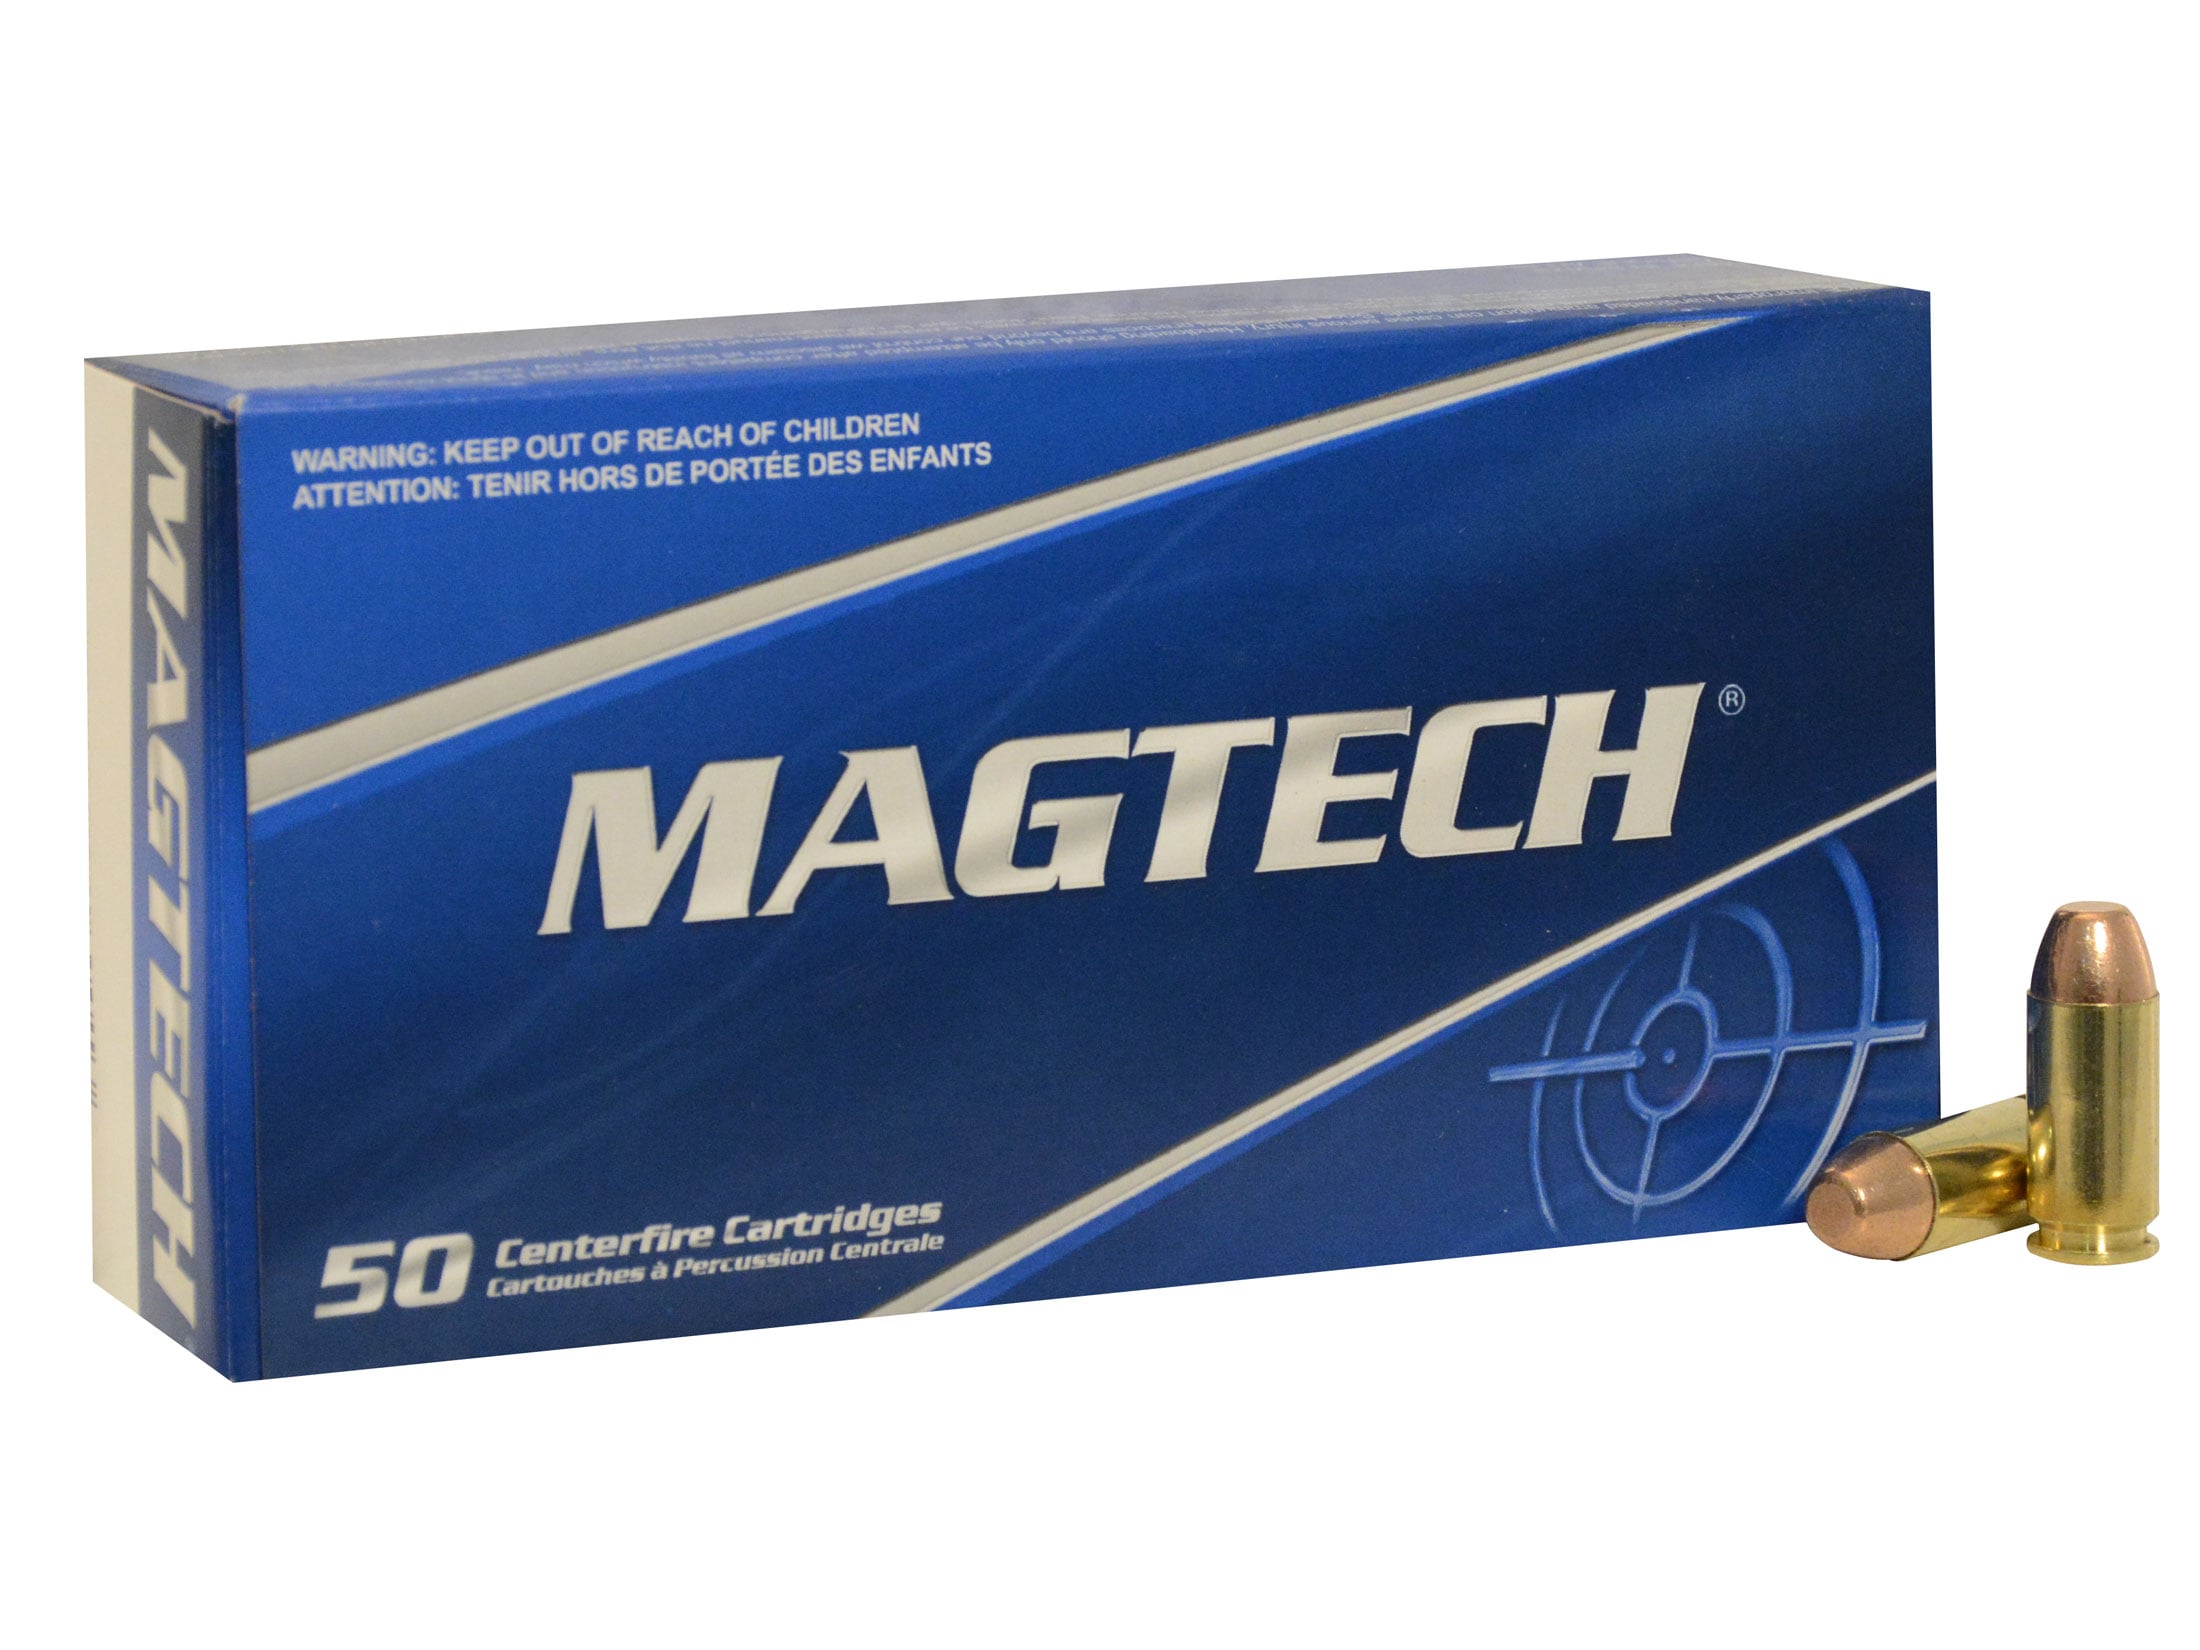 Magtech Ammo 40 S&W 180 Grain Full Metal Jacket Box of 50